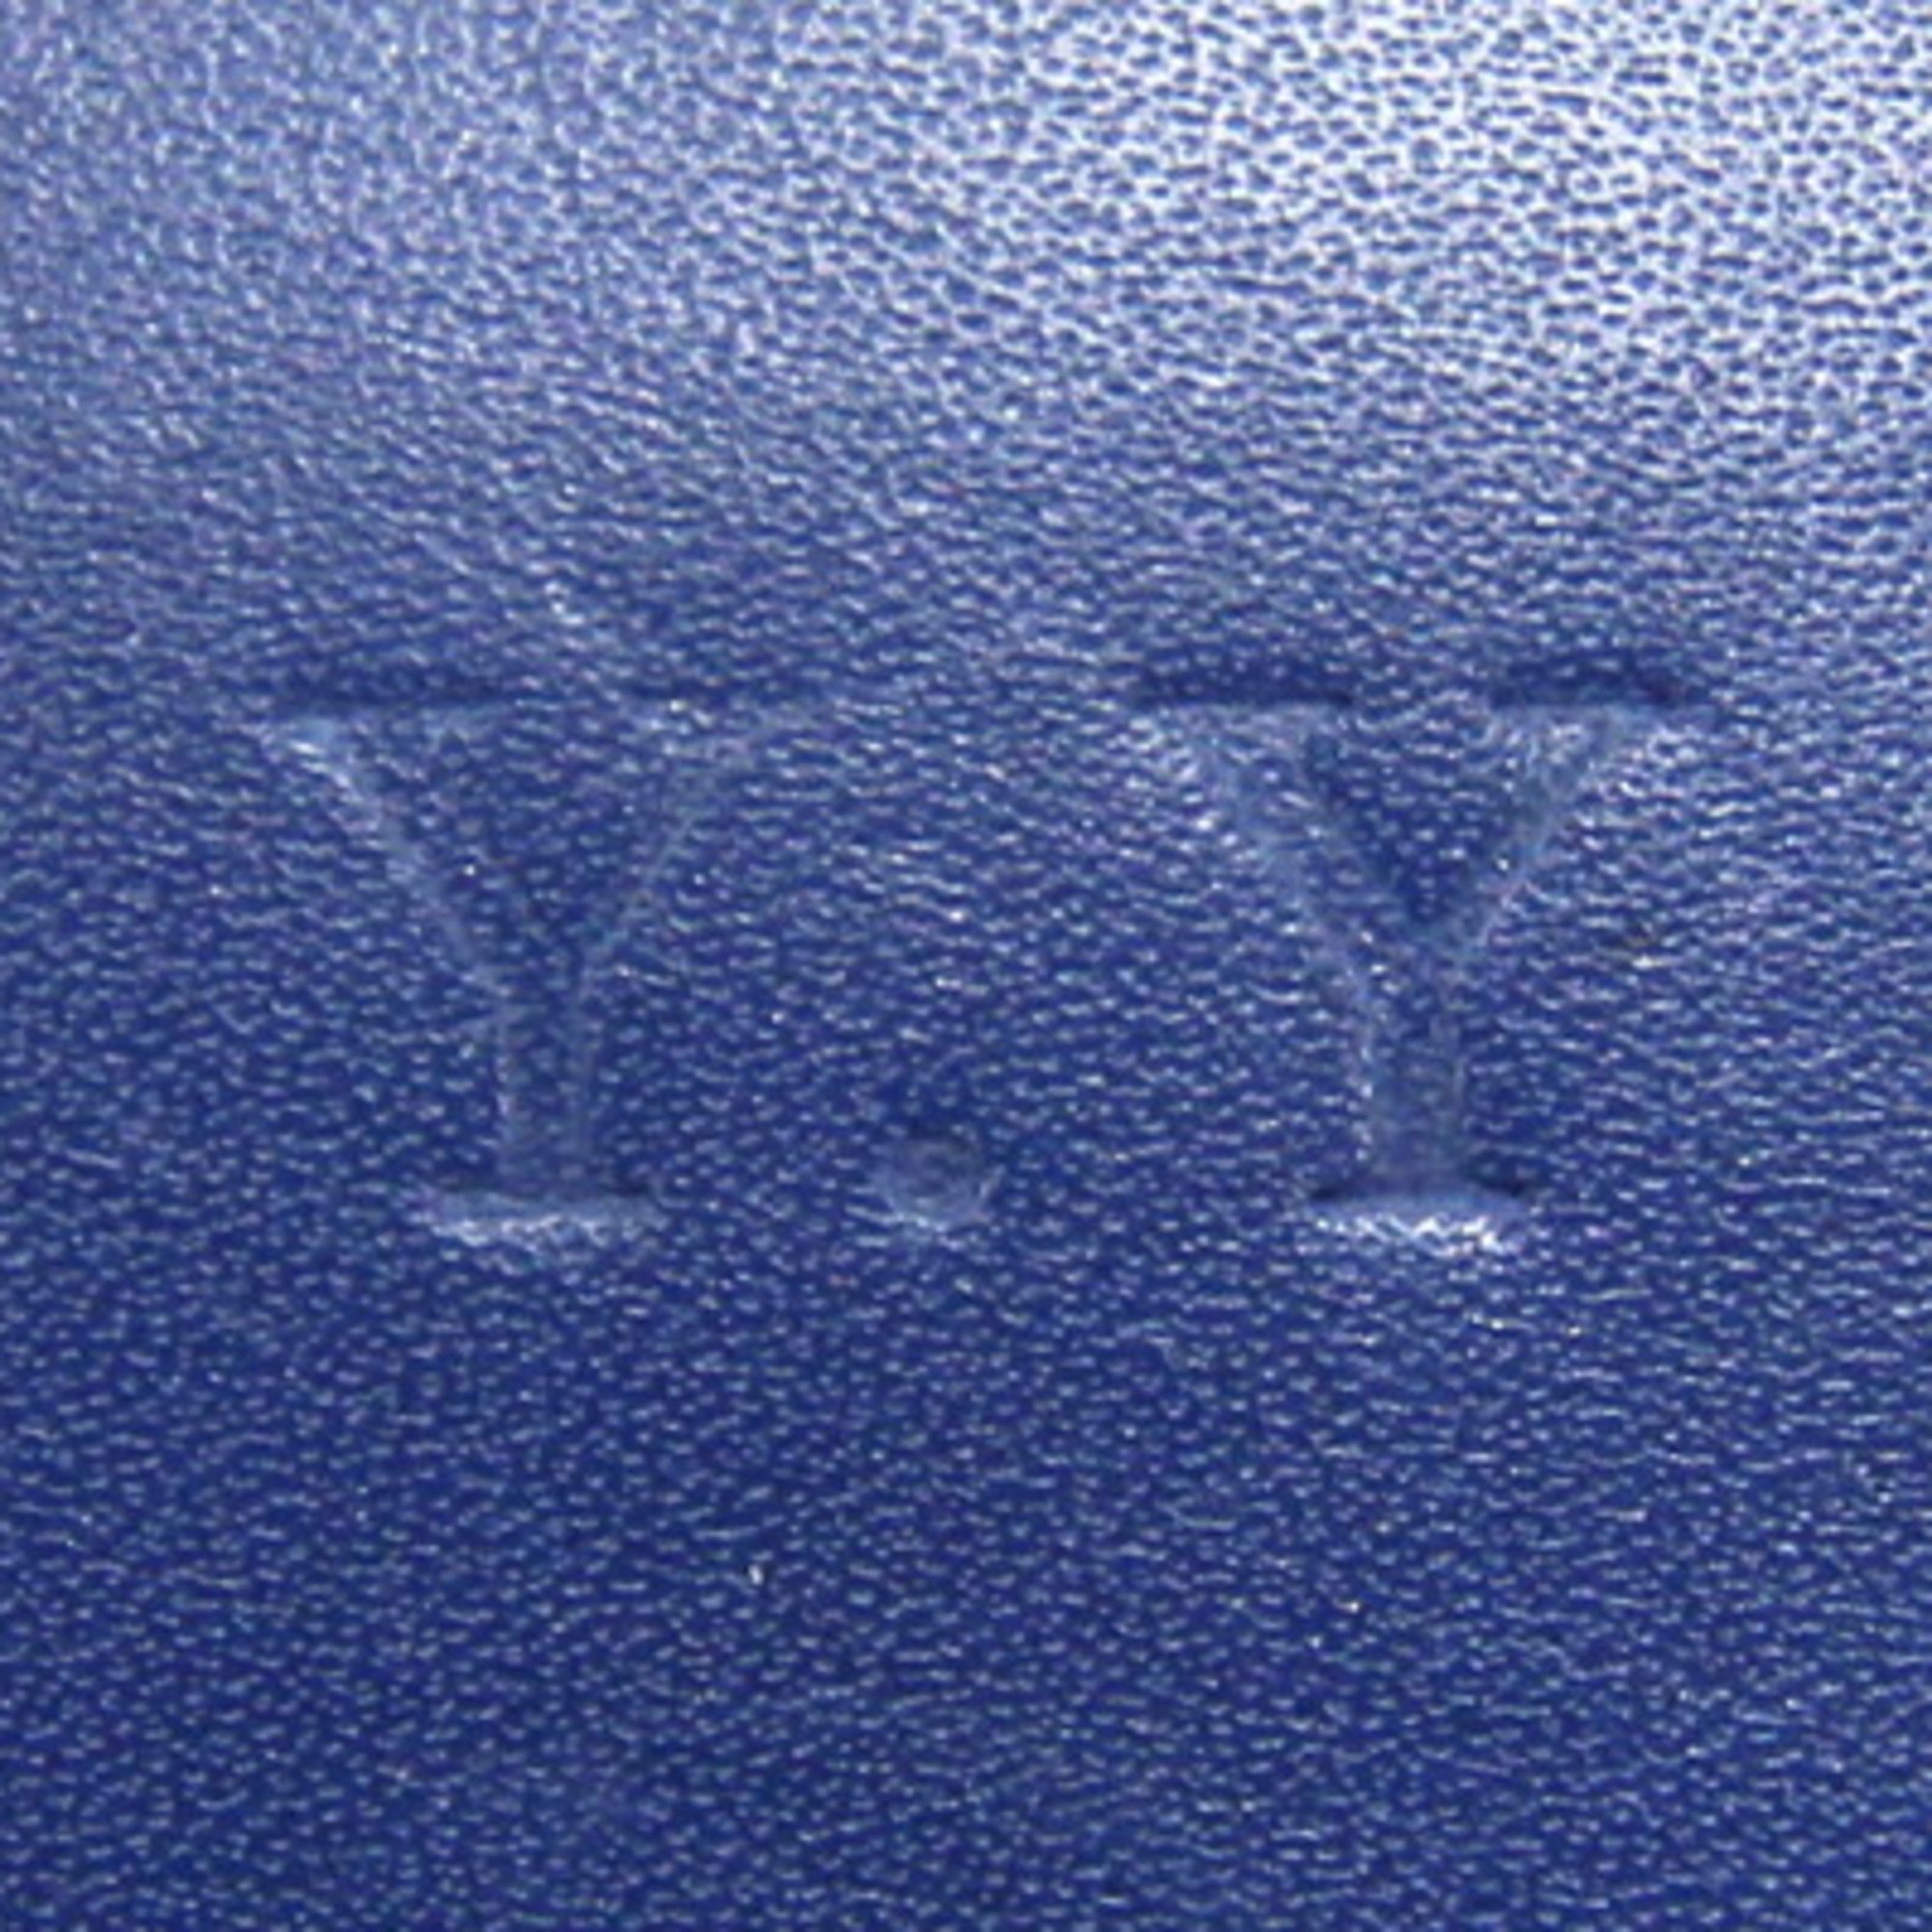 Bottega Veneta Business Card Holder Intrecciato Blue Leather Case for Men and Women BOTTEGA VENETA